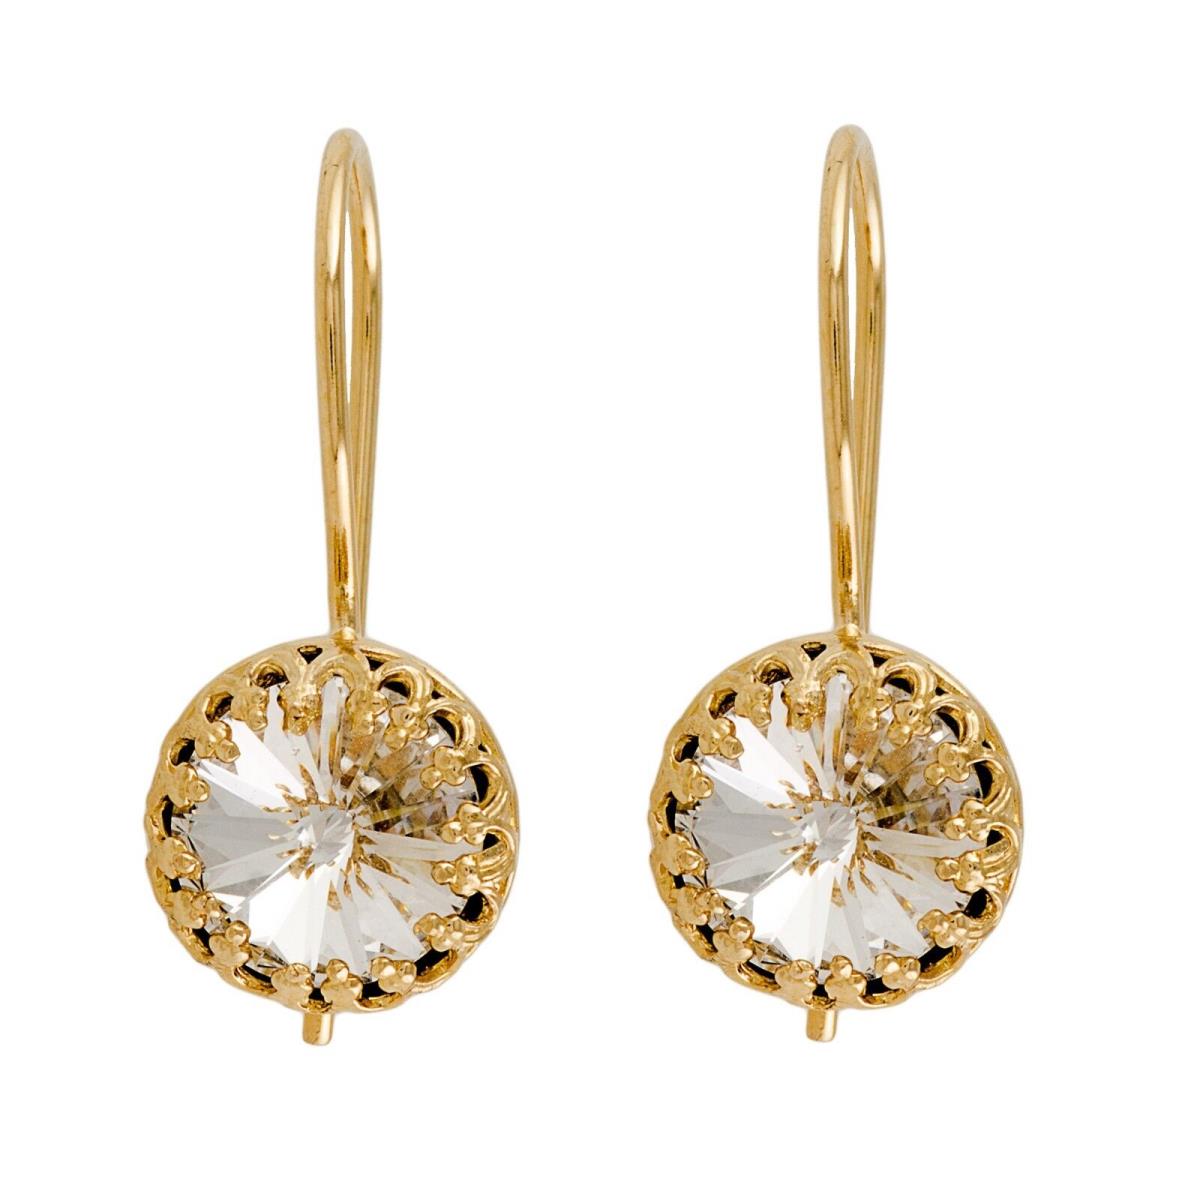 Swarovski Crystal Earrings Dangle Wedding 14K Yellow Gold Filled Bridal Jewelry